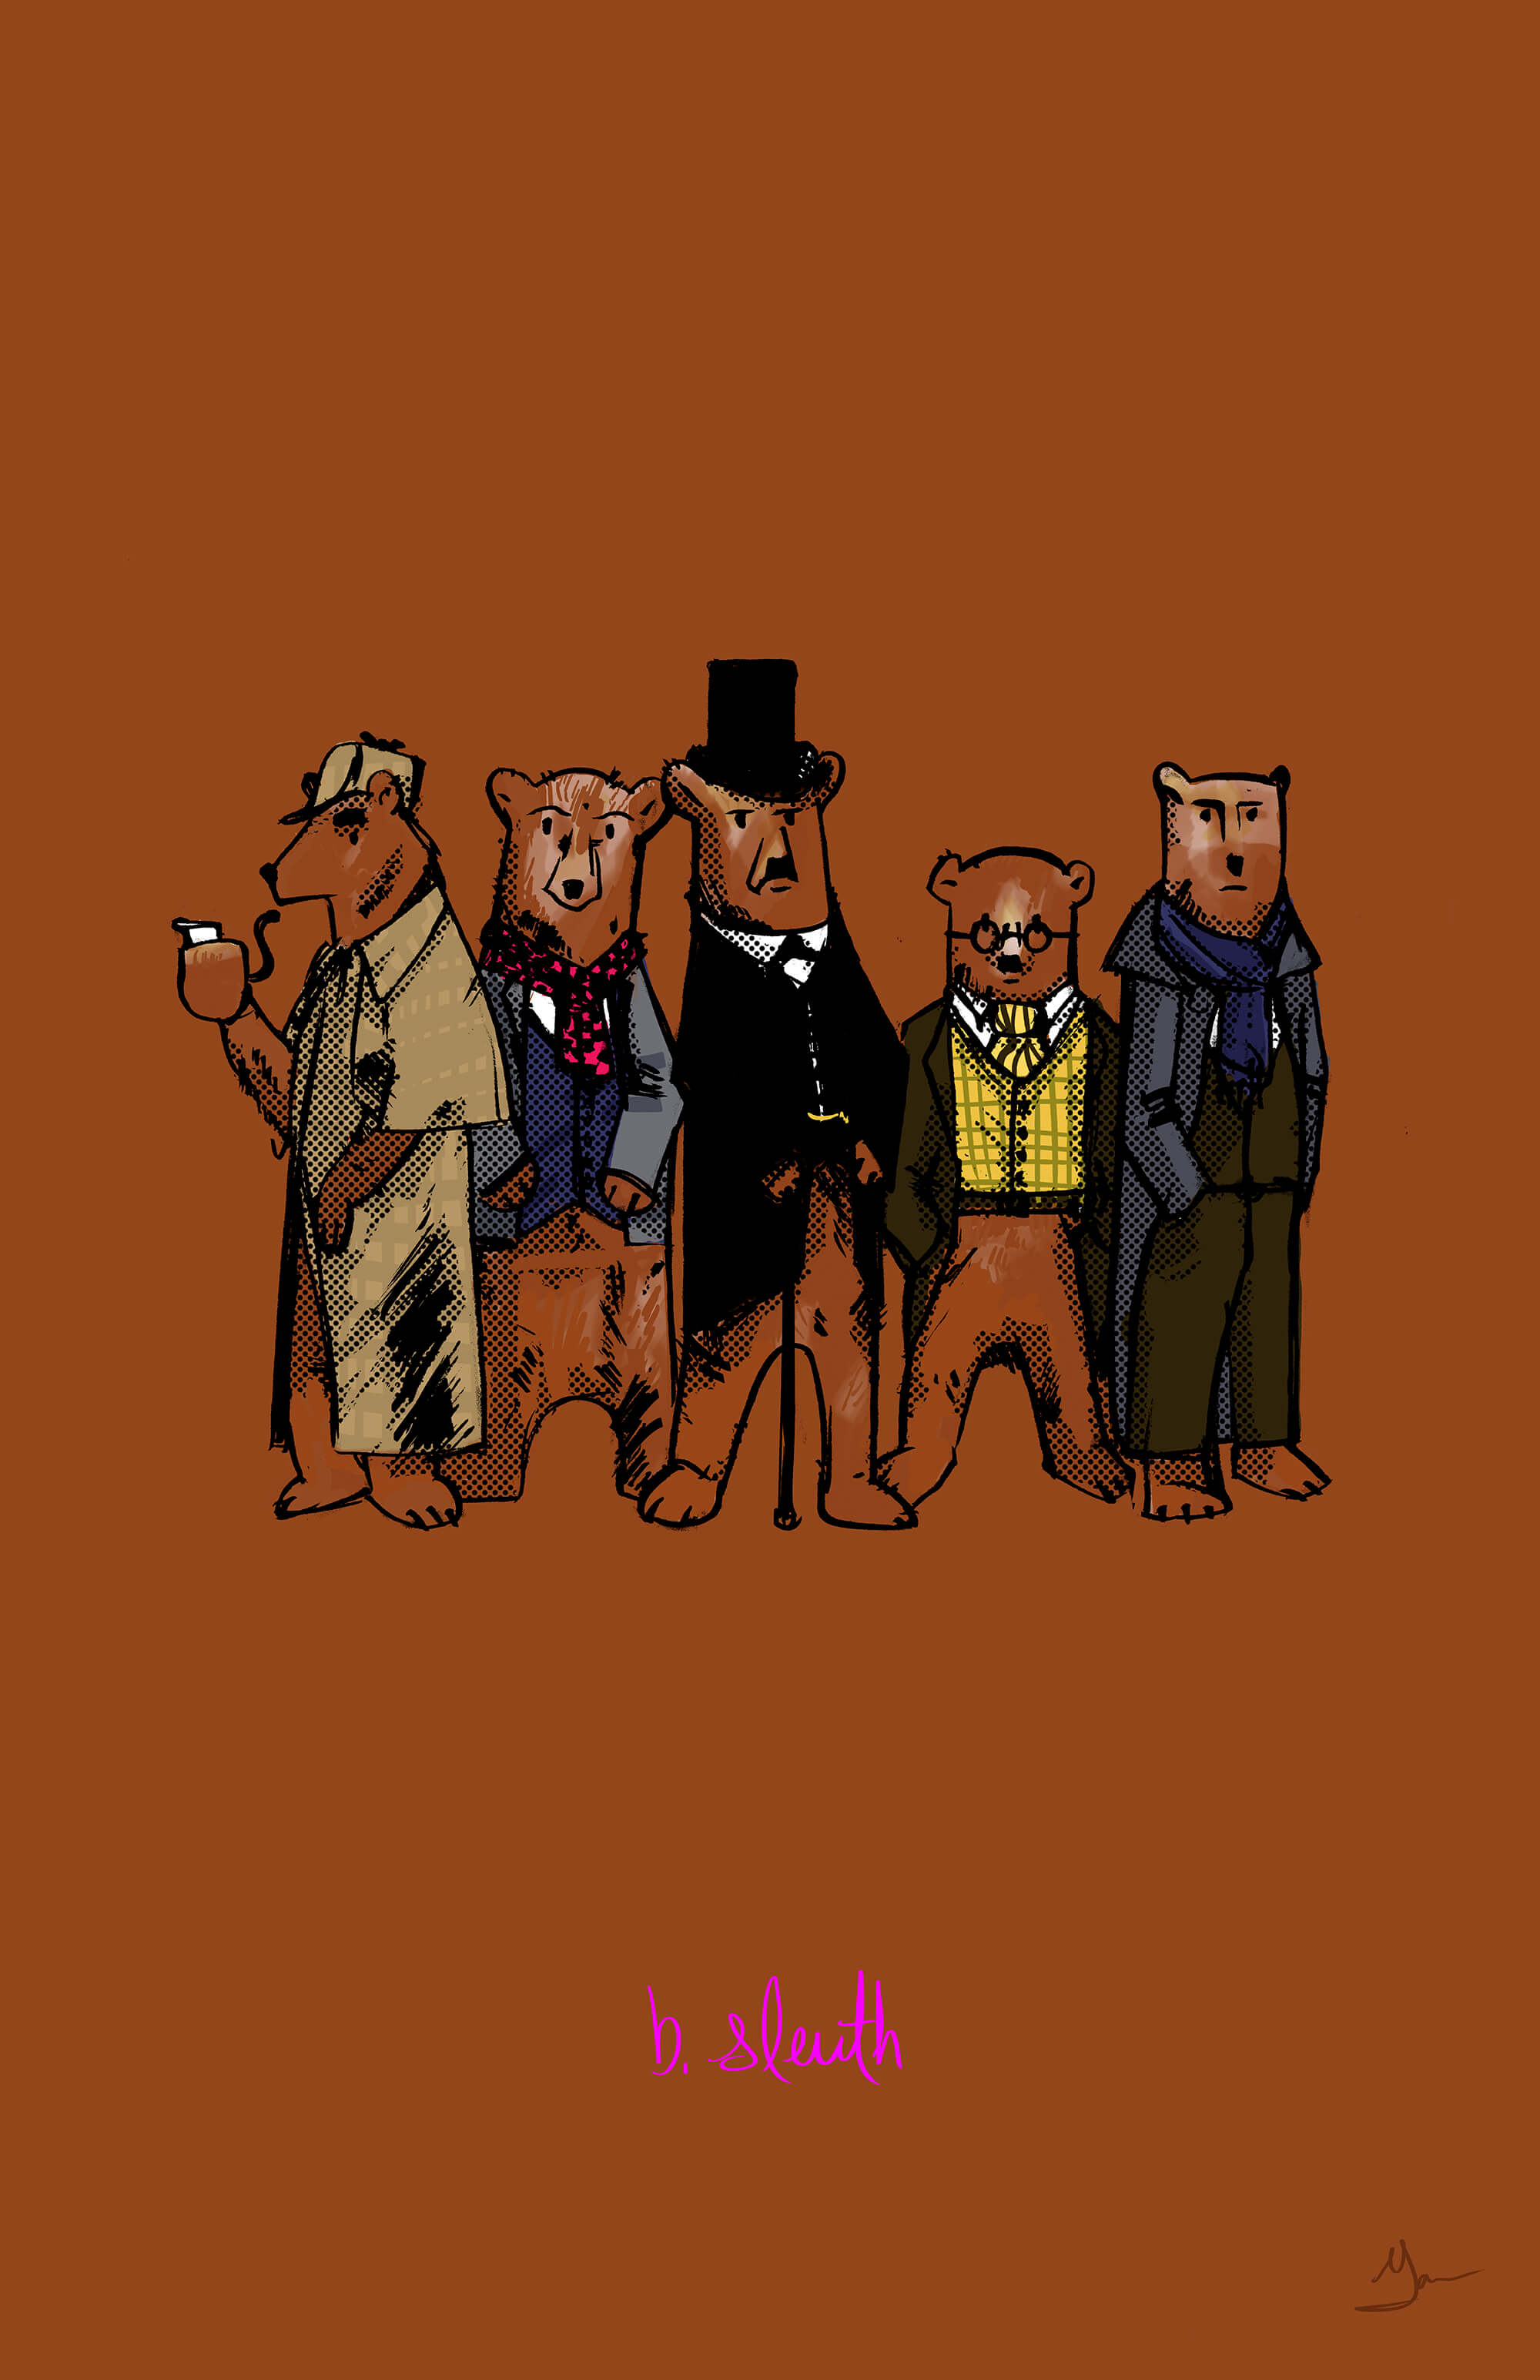 Five bears dressed up as Sherlock Holmes.